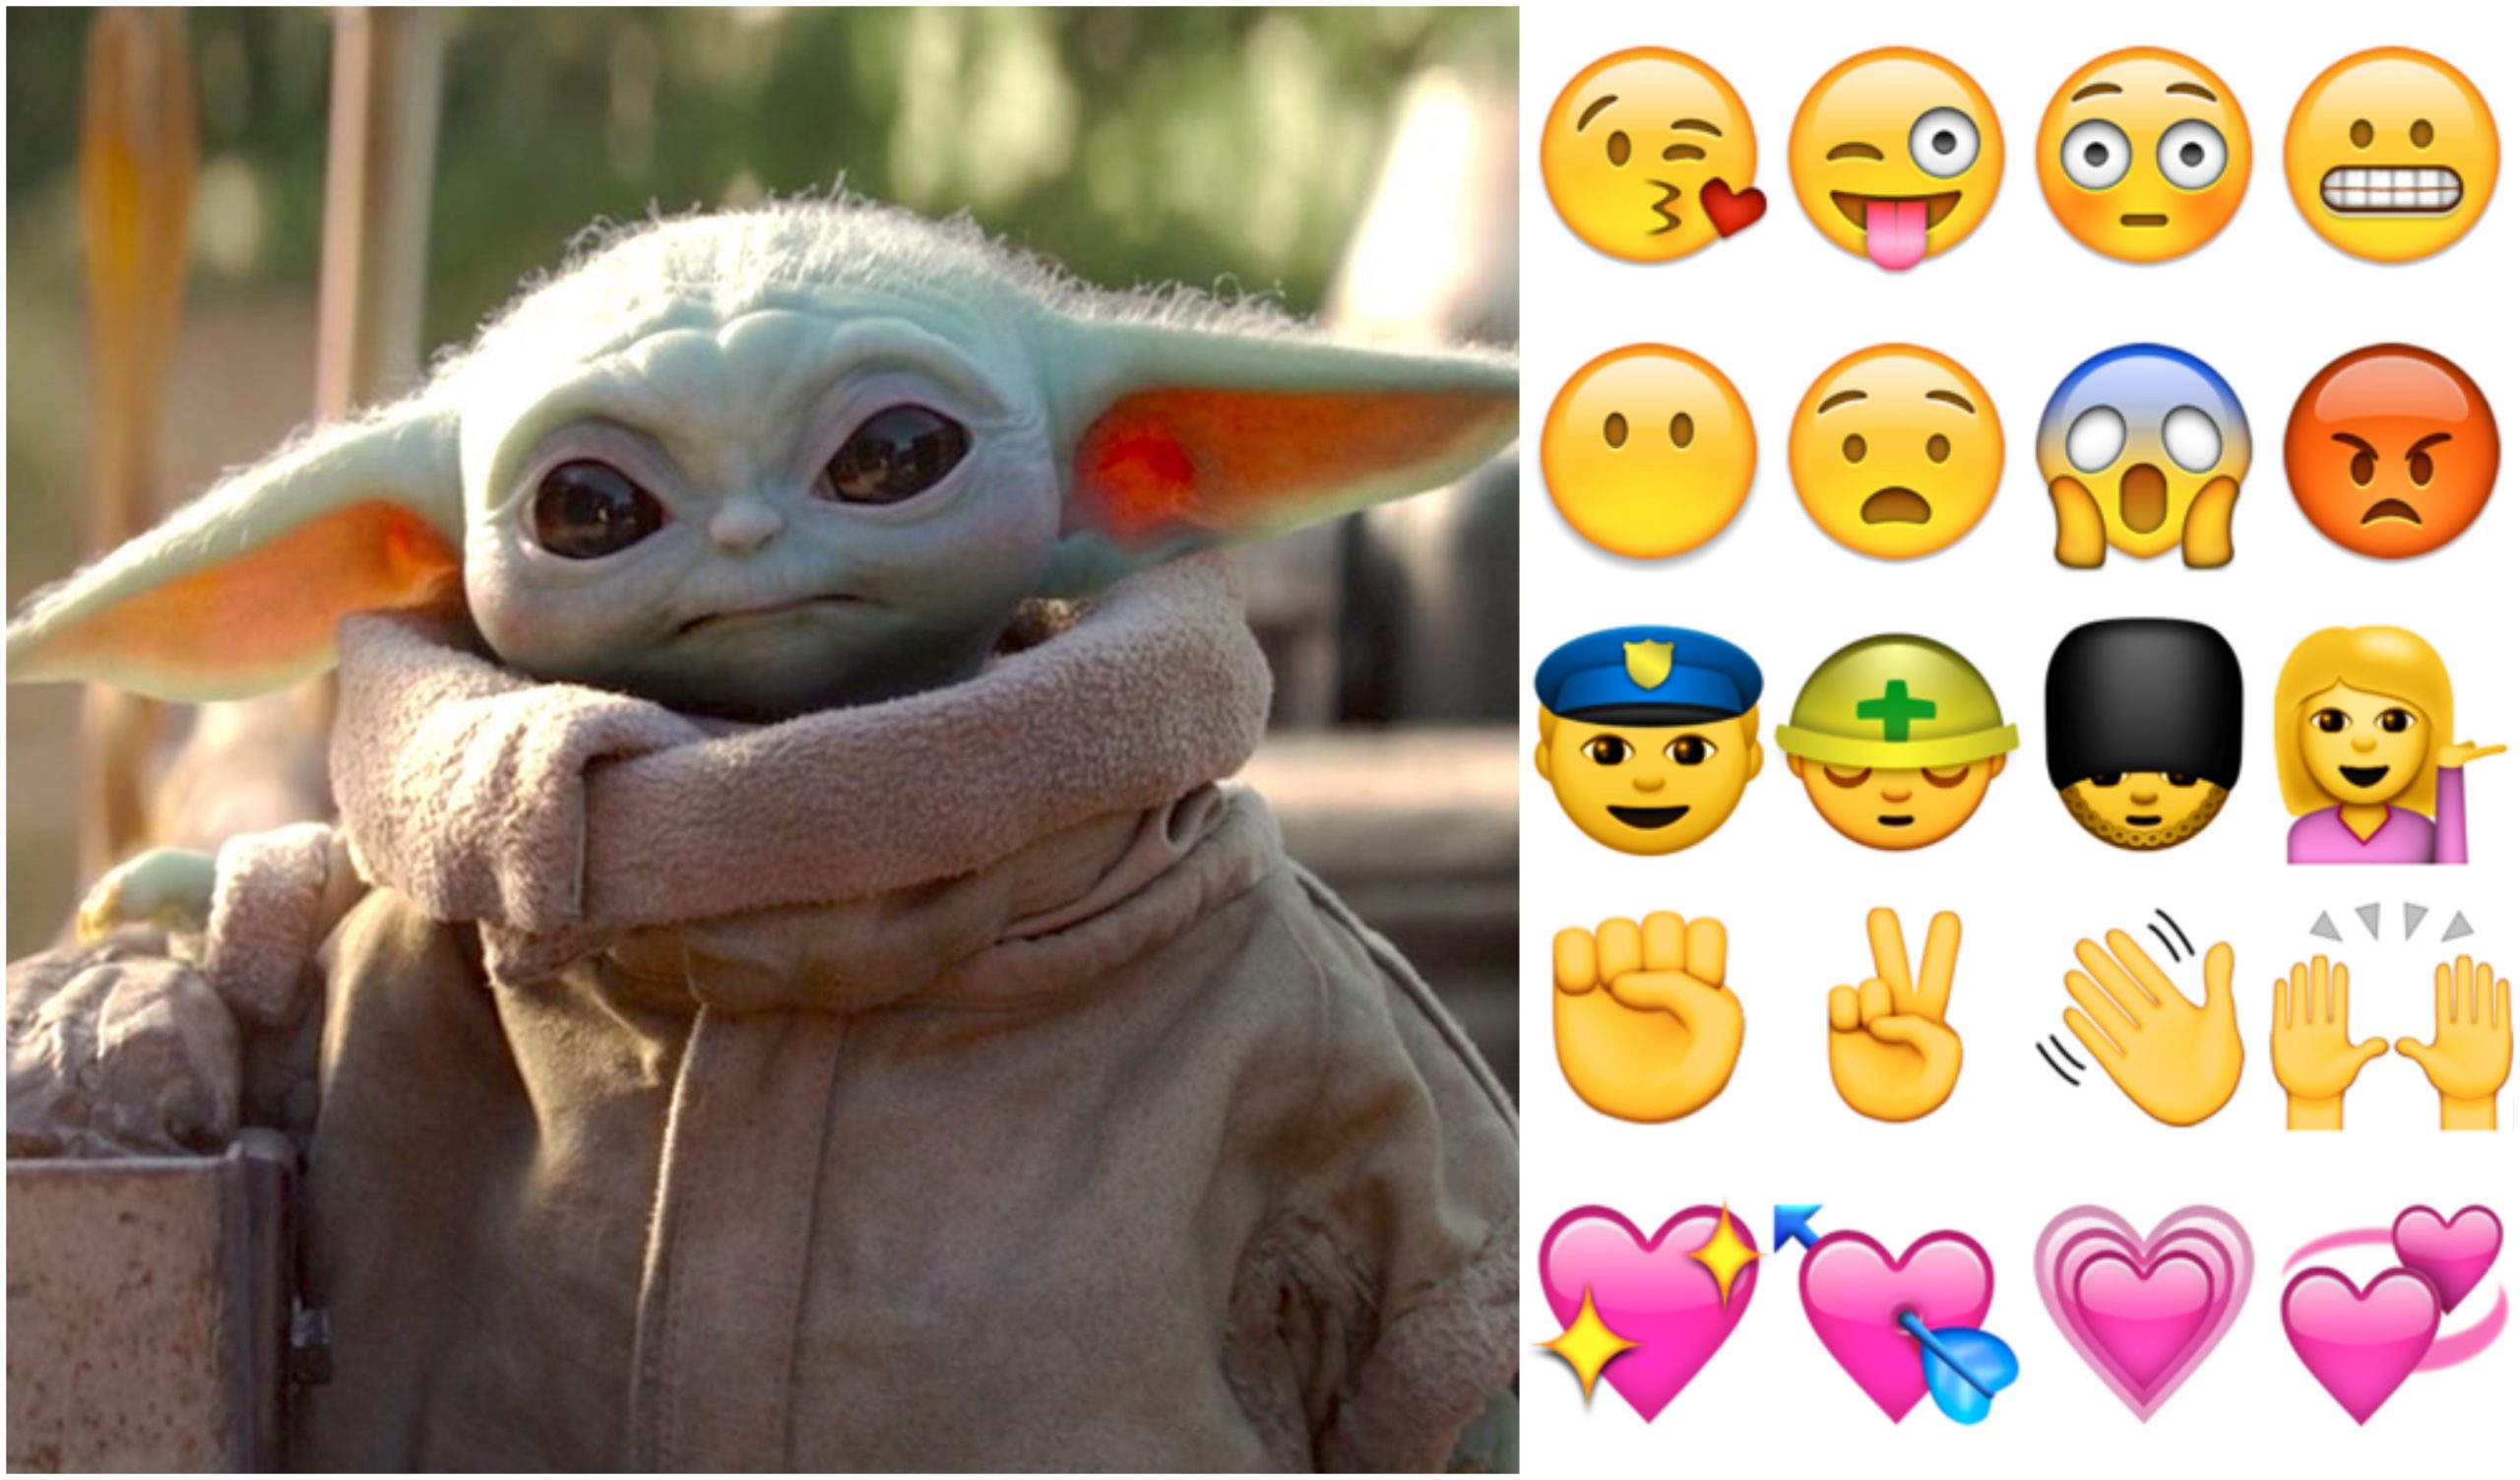 Star Wars Fan Starts Petition to Add Baby Yoda to Emoji’s